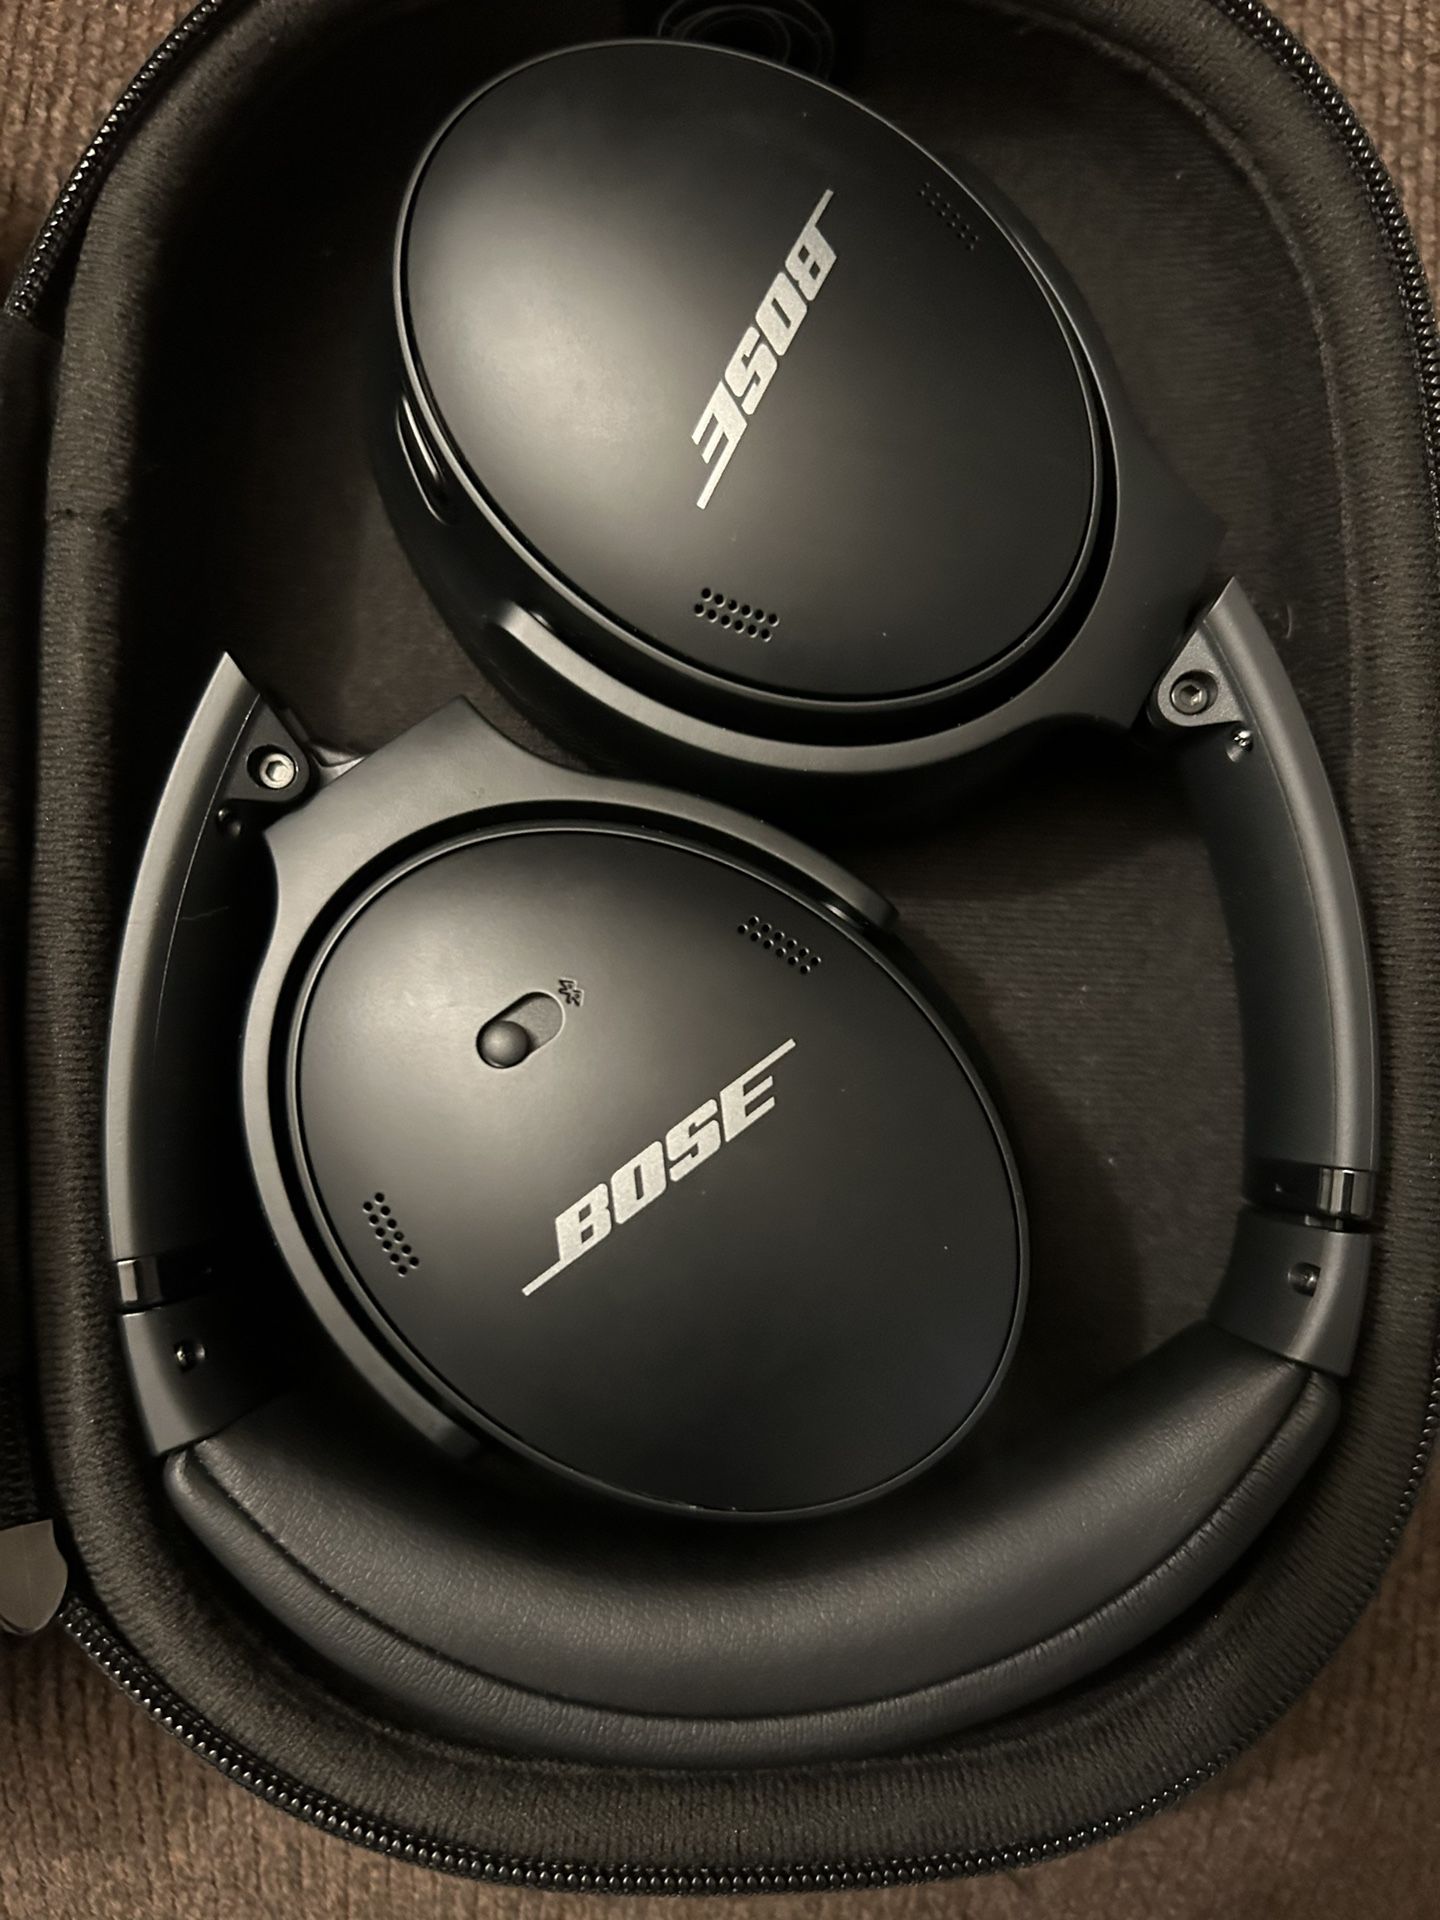 Bose QC45 Noise Canceling Headphones 